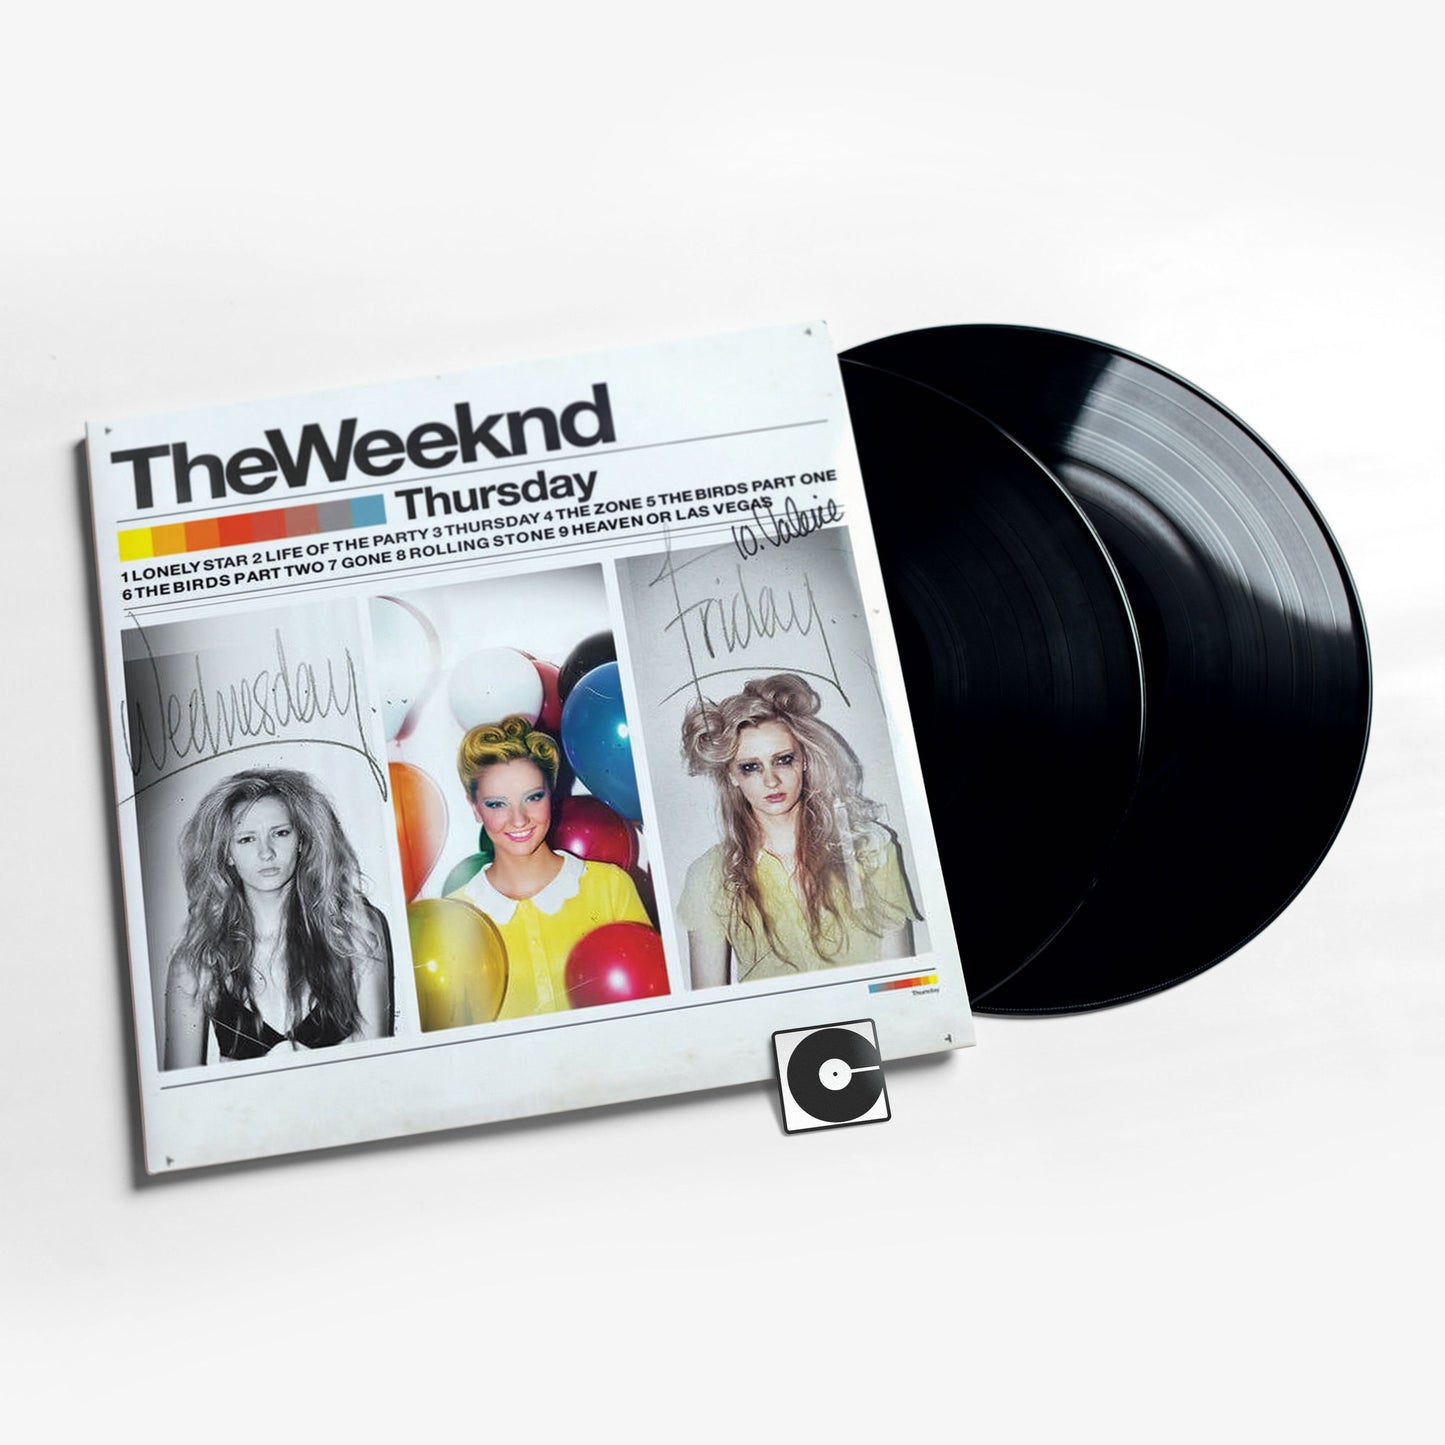 The Weeknd - "Thursday"